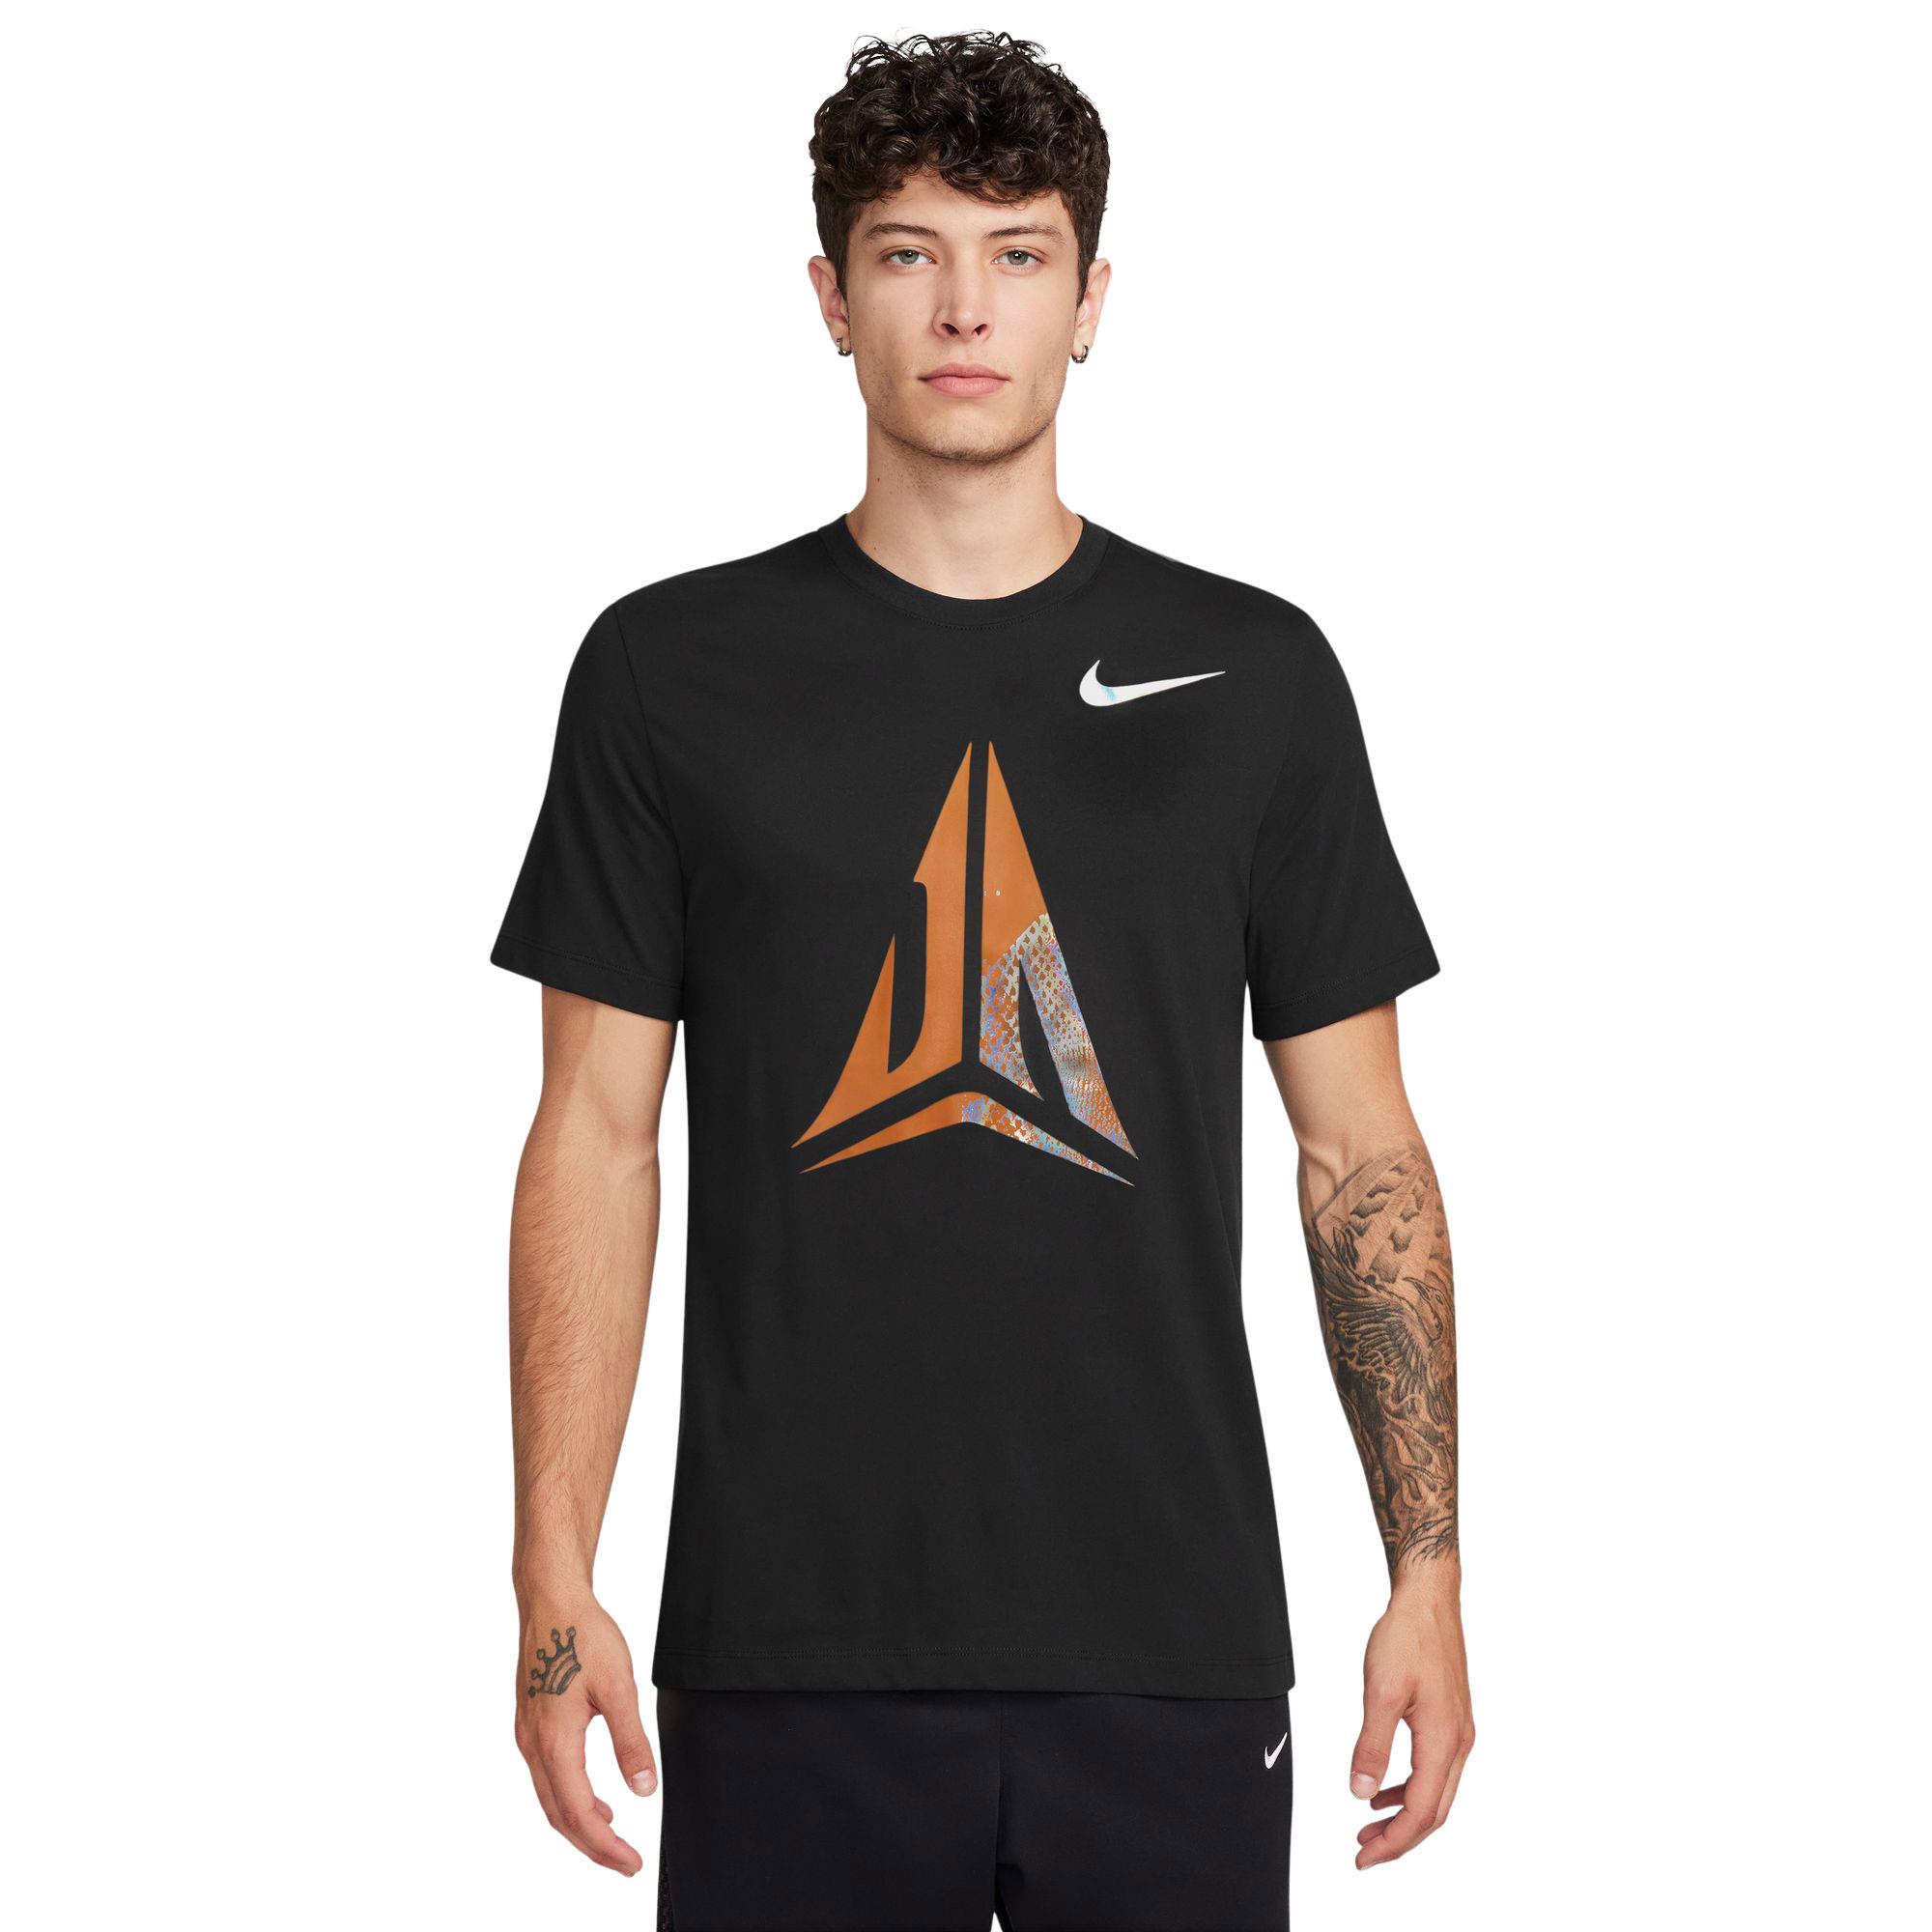 Nike Mens Ja Morant Dri-FIT Basketball Tee Black L